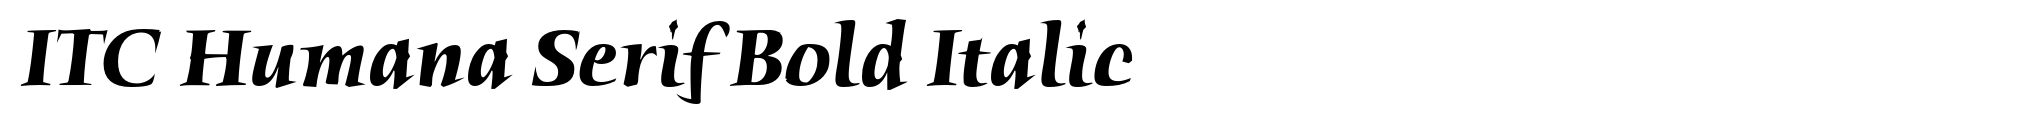 ITC Humana Serif Bold Italic image